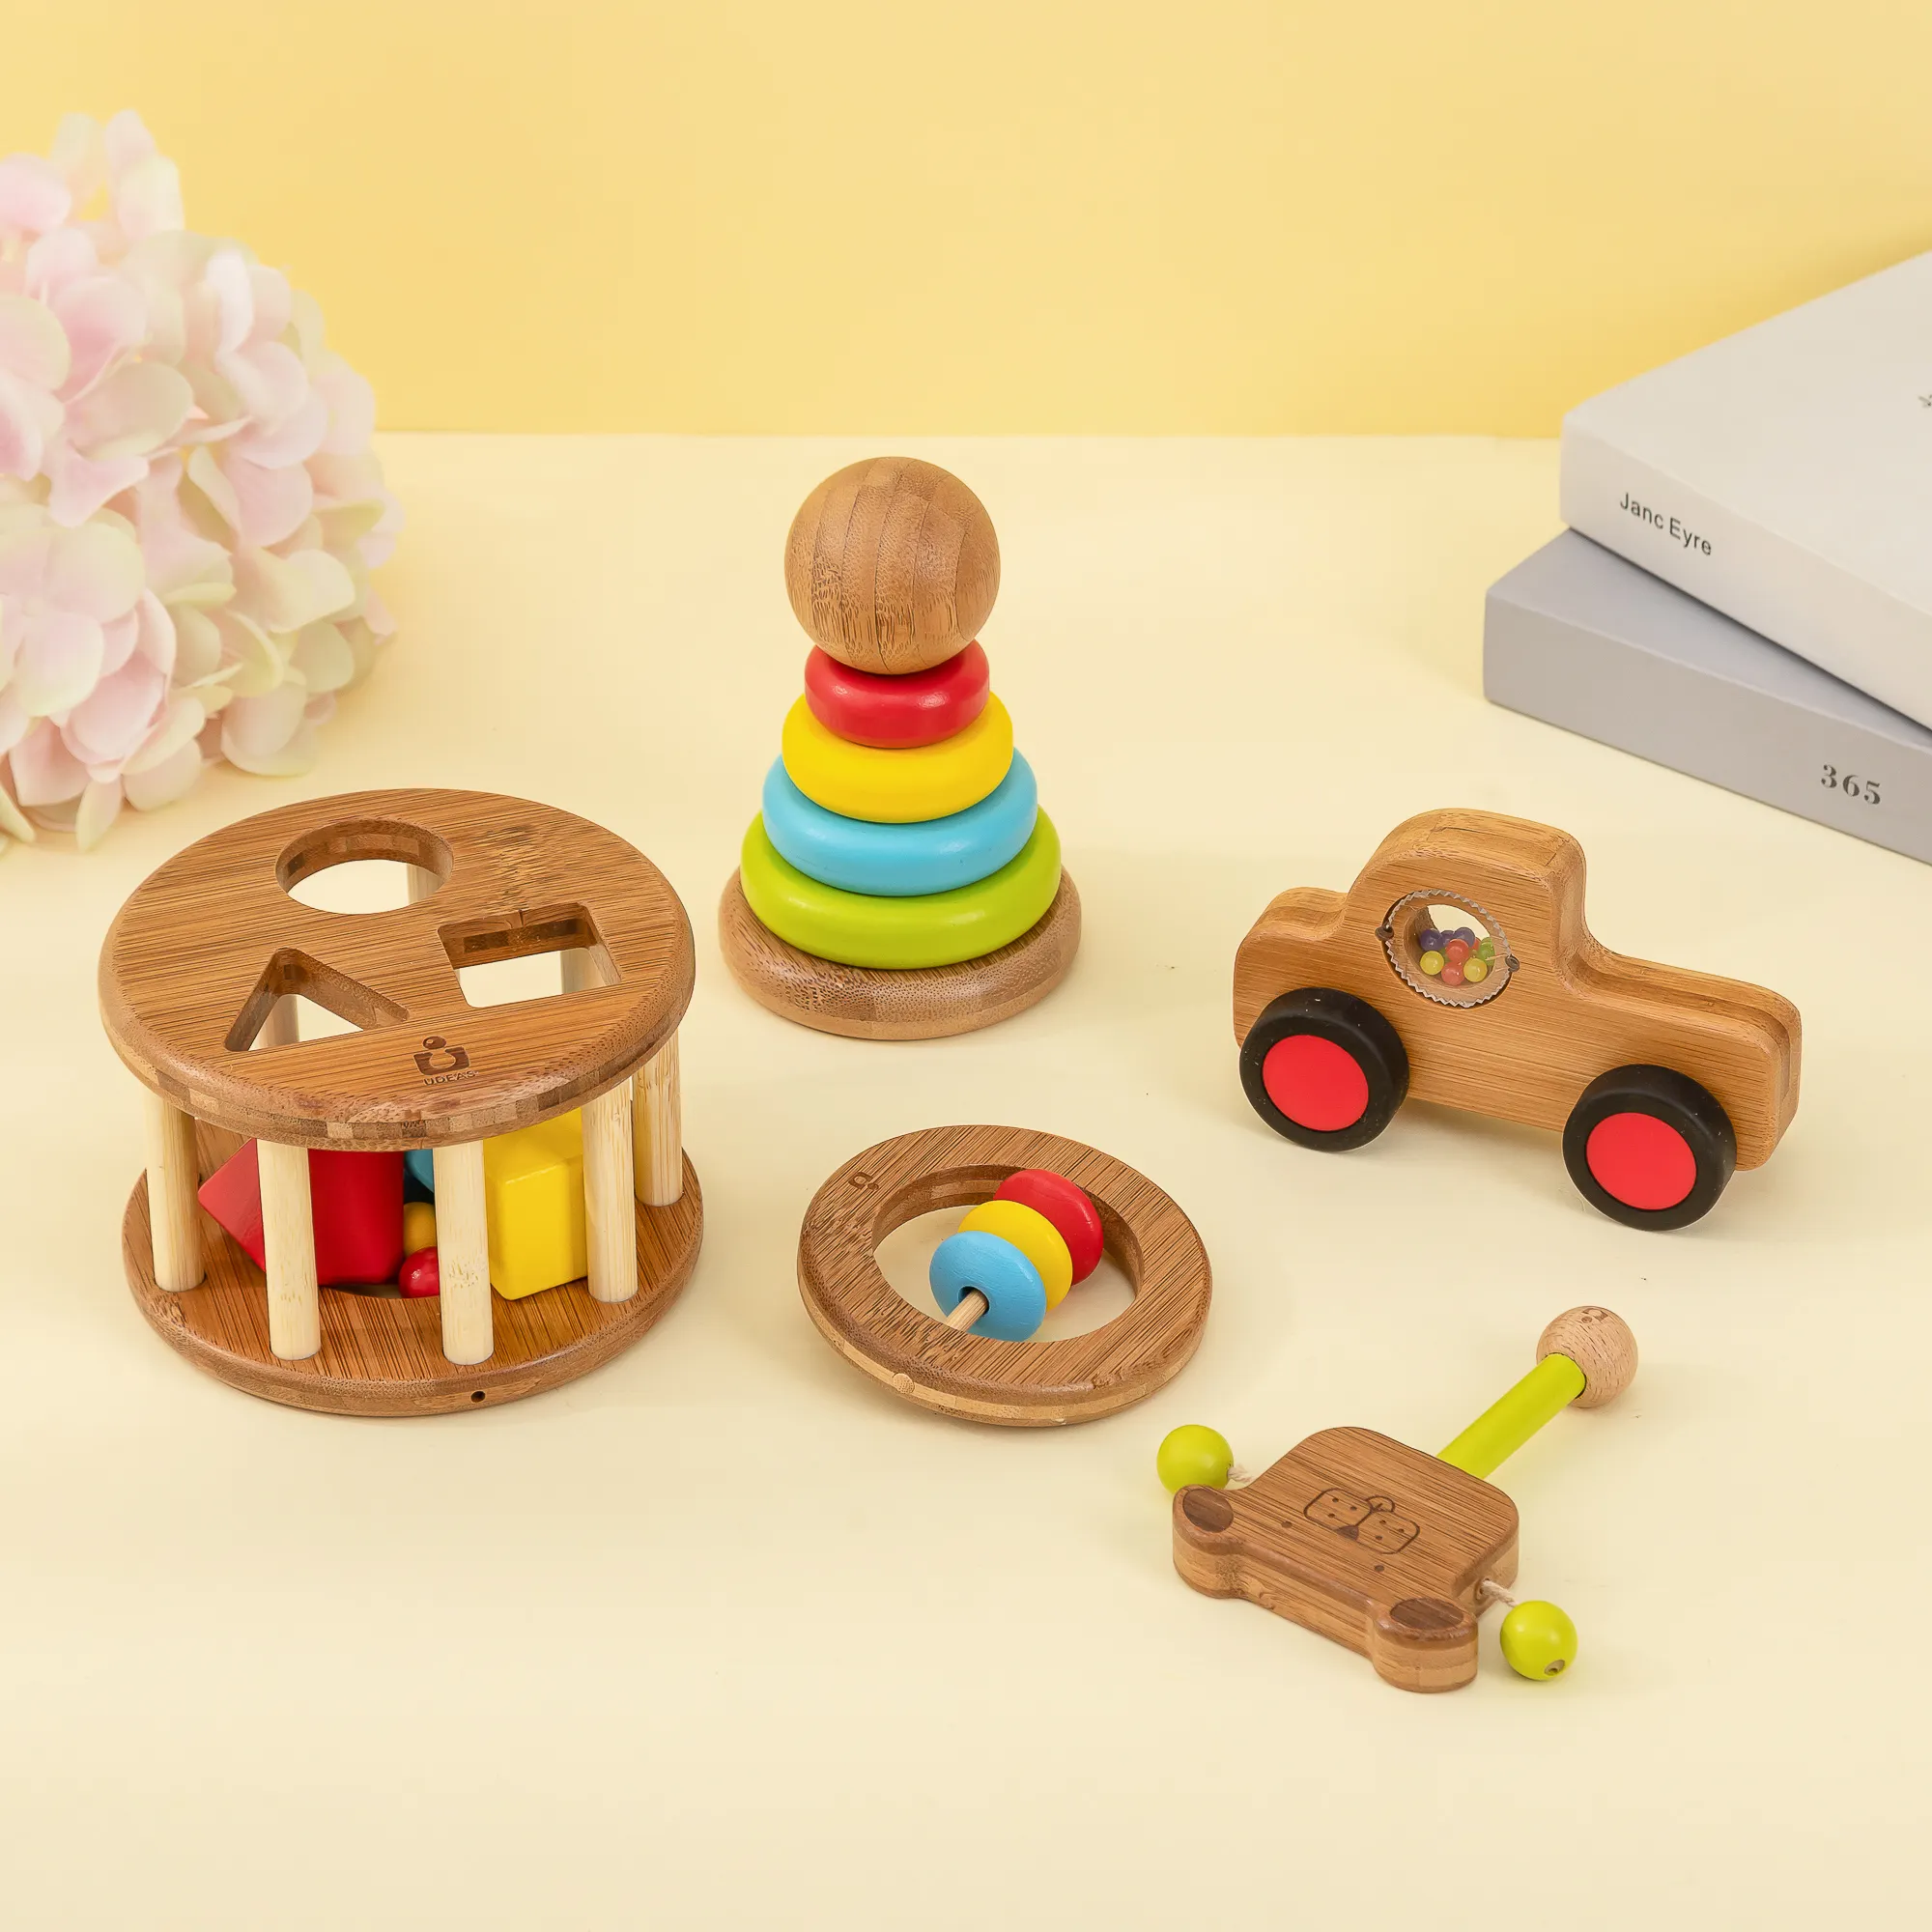 UDEAS 2 3 שנה תינוק במבוק צעצוע ילד פאזל משחק ממייני חינוכיים צעצועי עץ